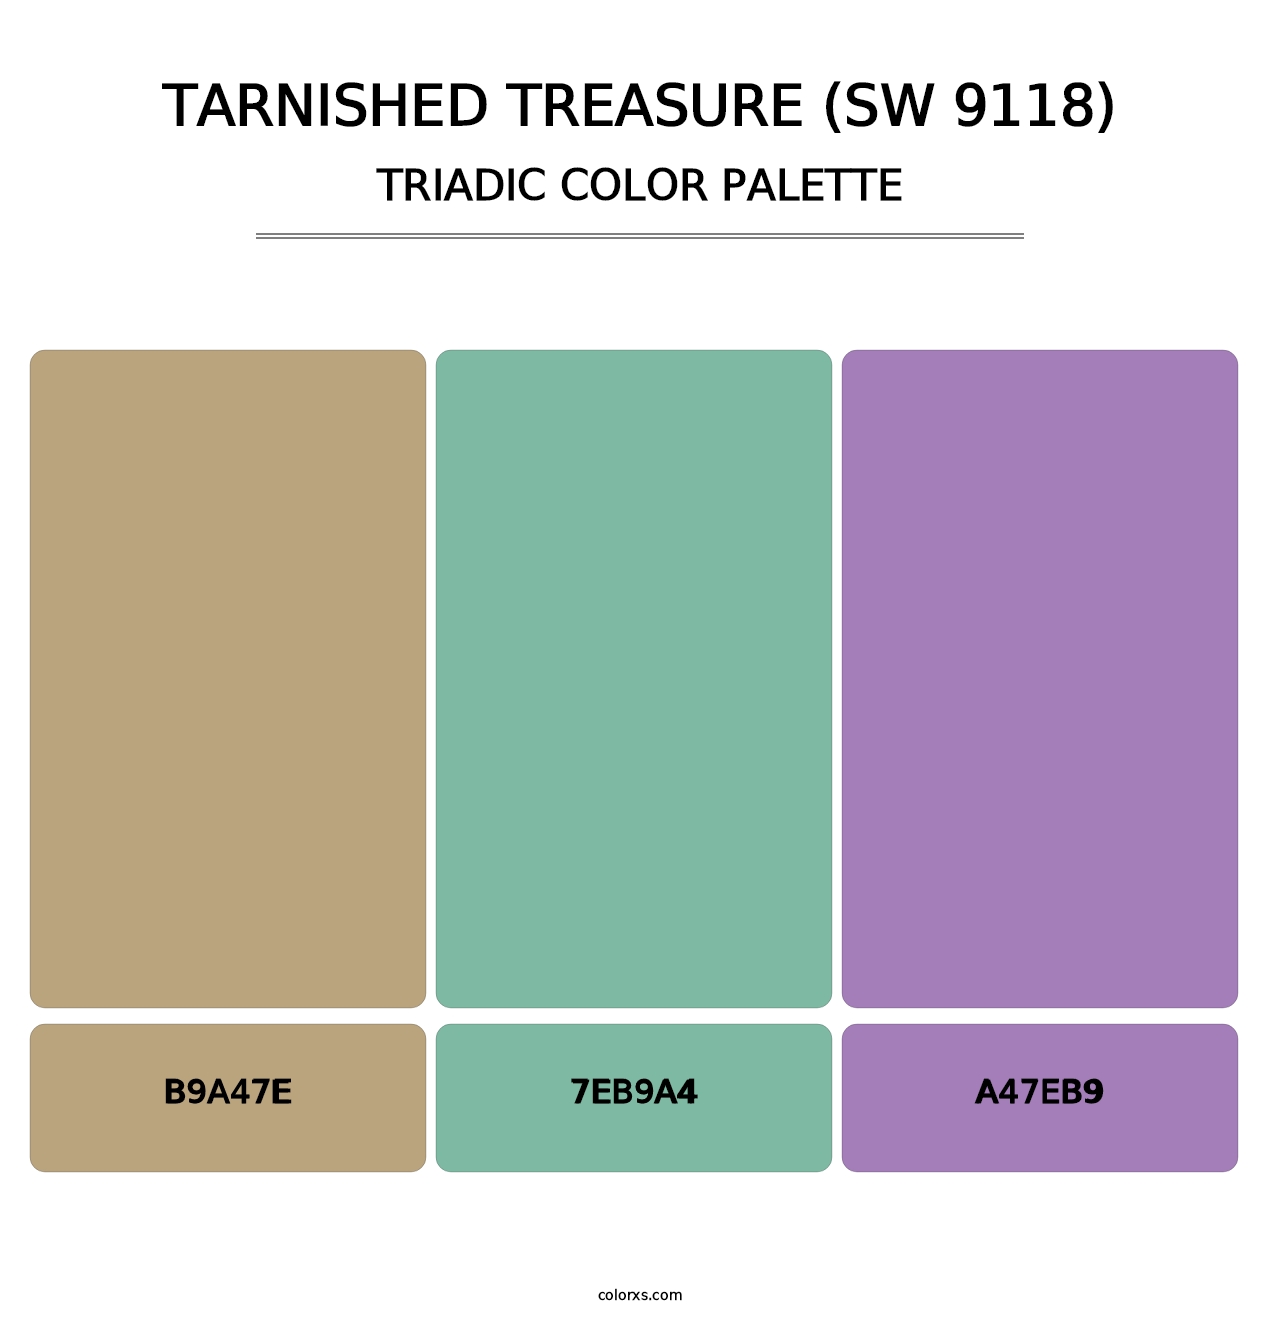 Tarnished Treasure (SW 9118) - Triadic Color Palette